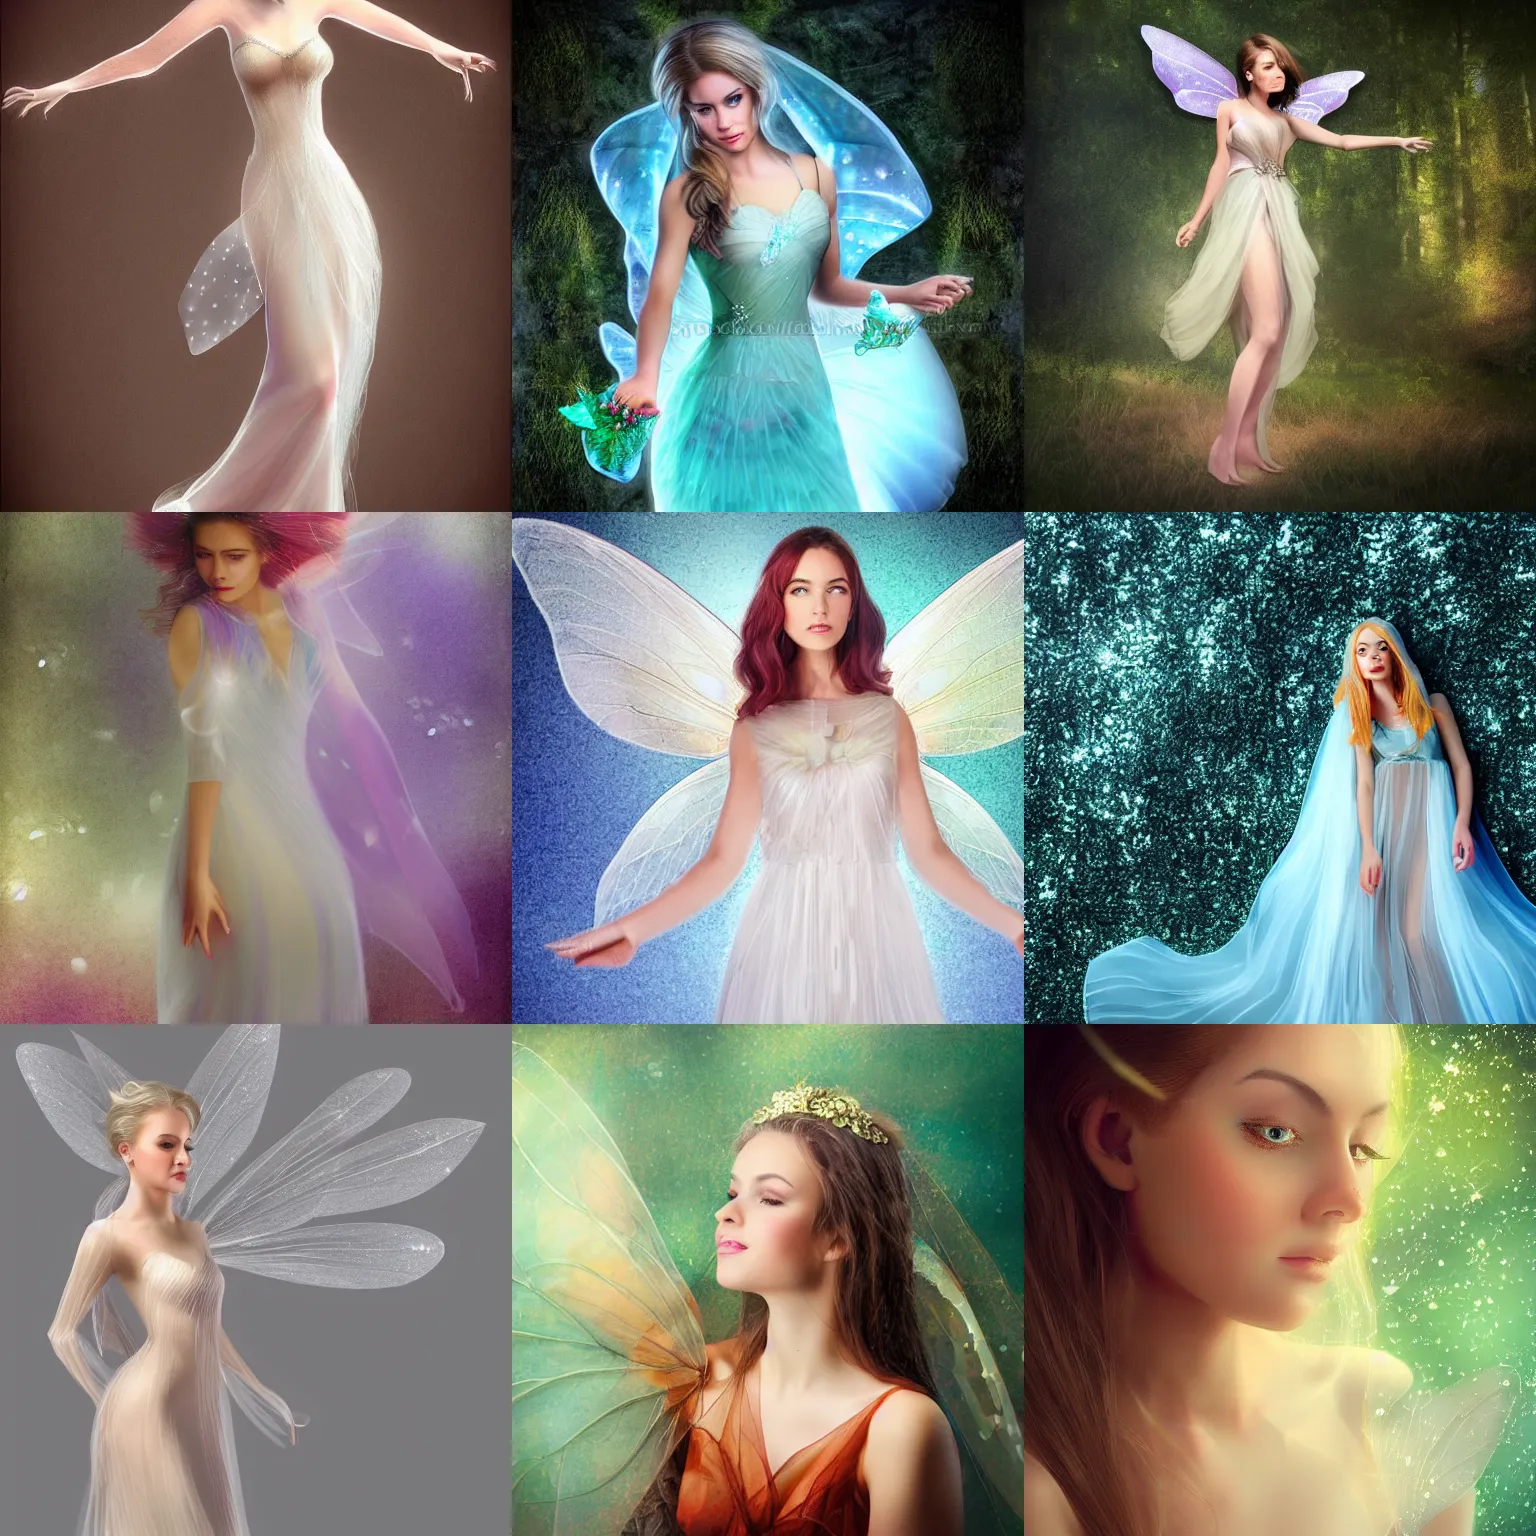 Prompt: prompt portrait of beautiful female fairy, translucent dress